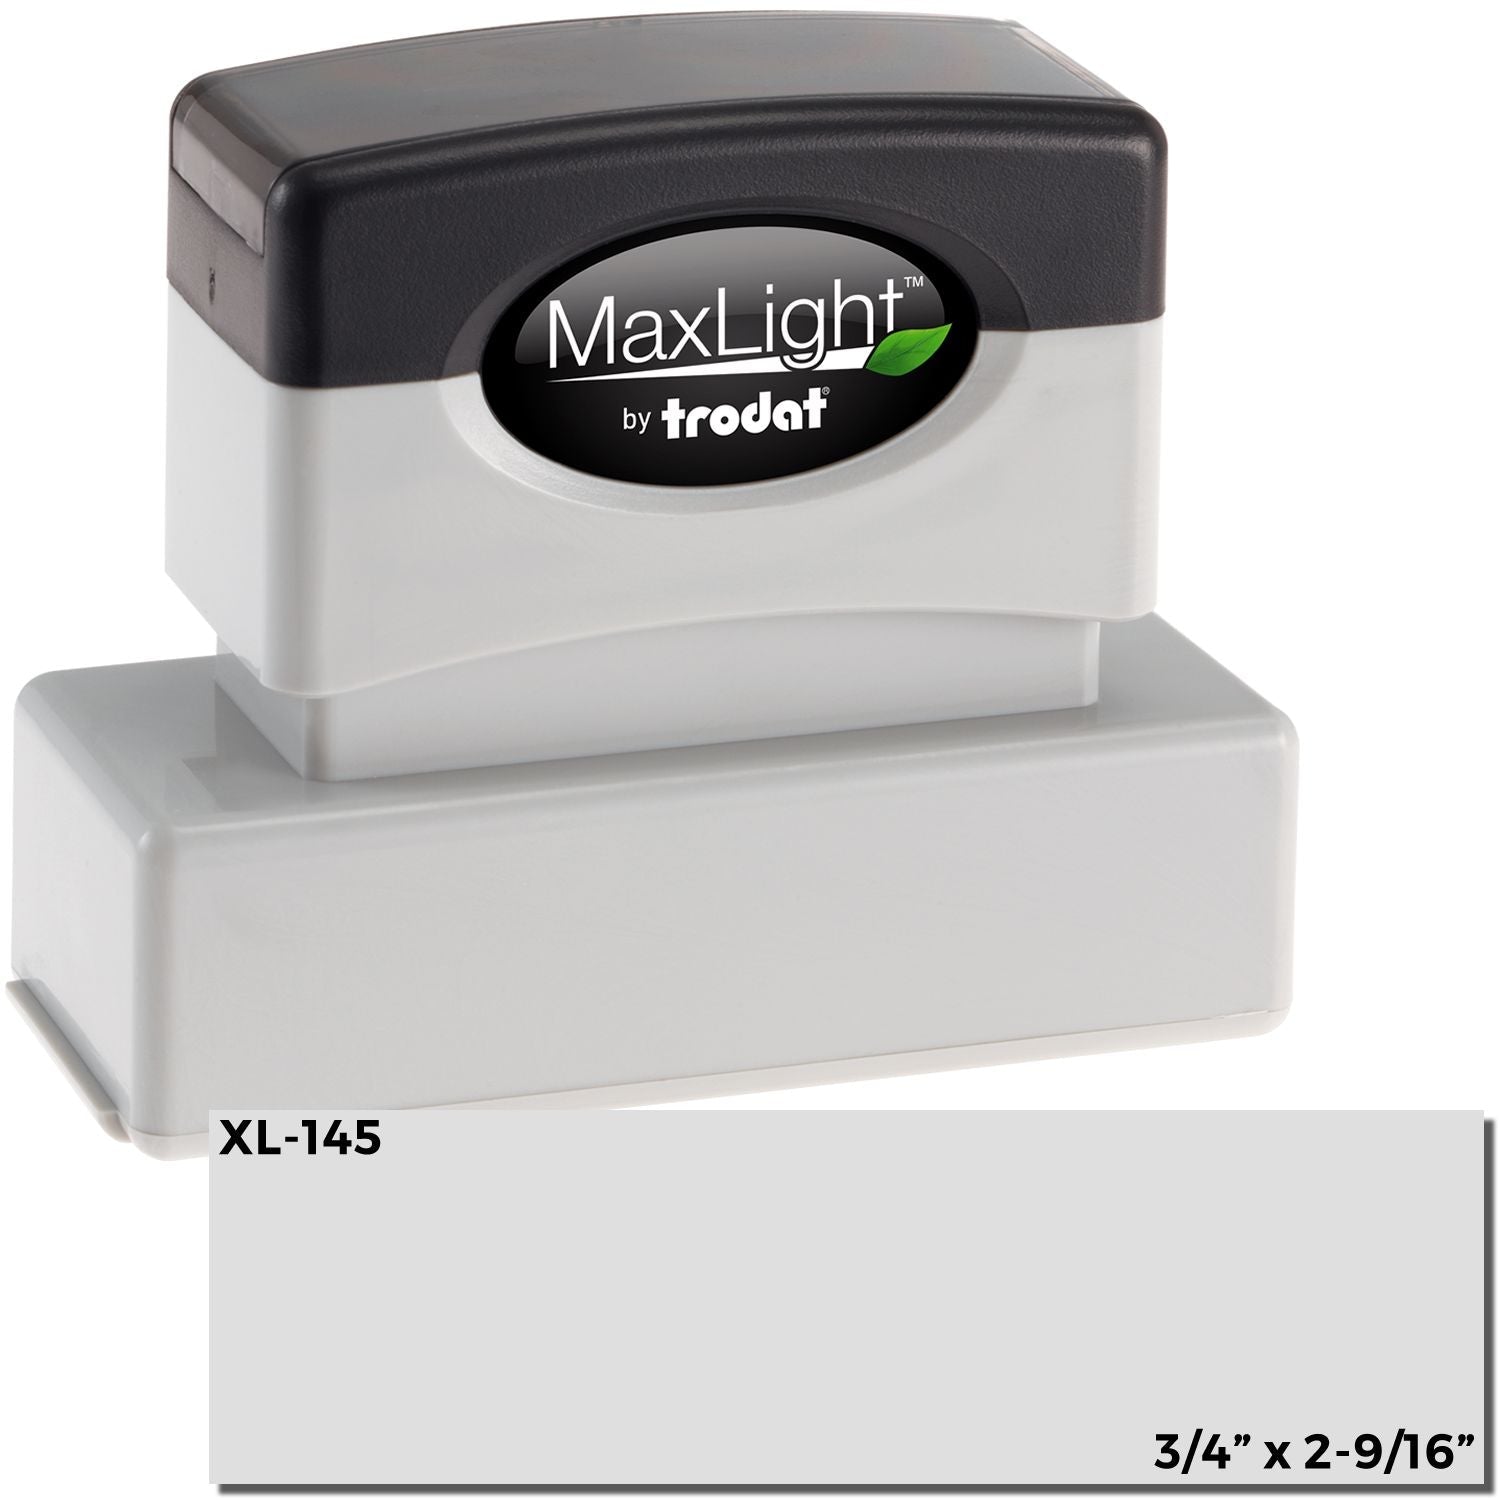 Maxlight Xl2 145 Pre Inked Stamp 5 8 X 2 3 8 Main Image